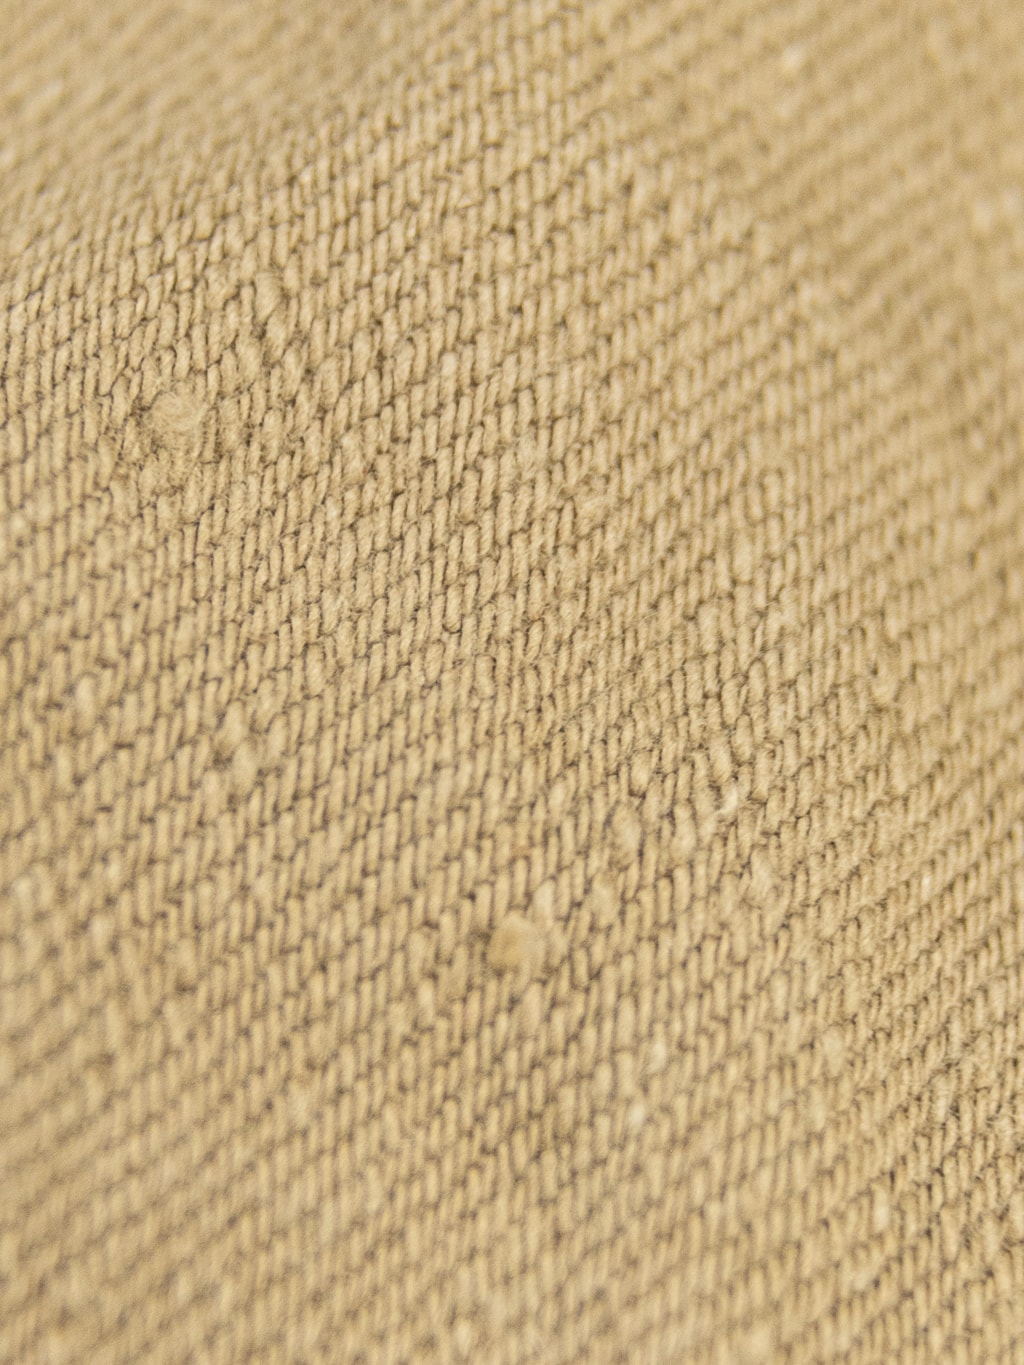 ONI Denim 03501 Sulfur Coverall Jacket Khaki Beige texture fabric